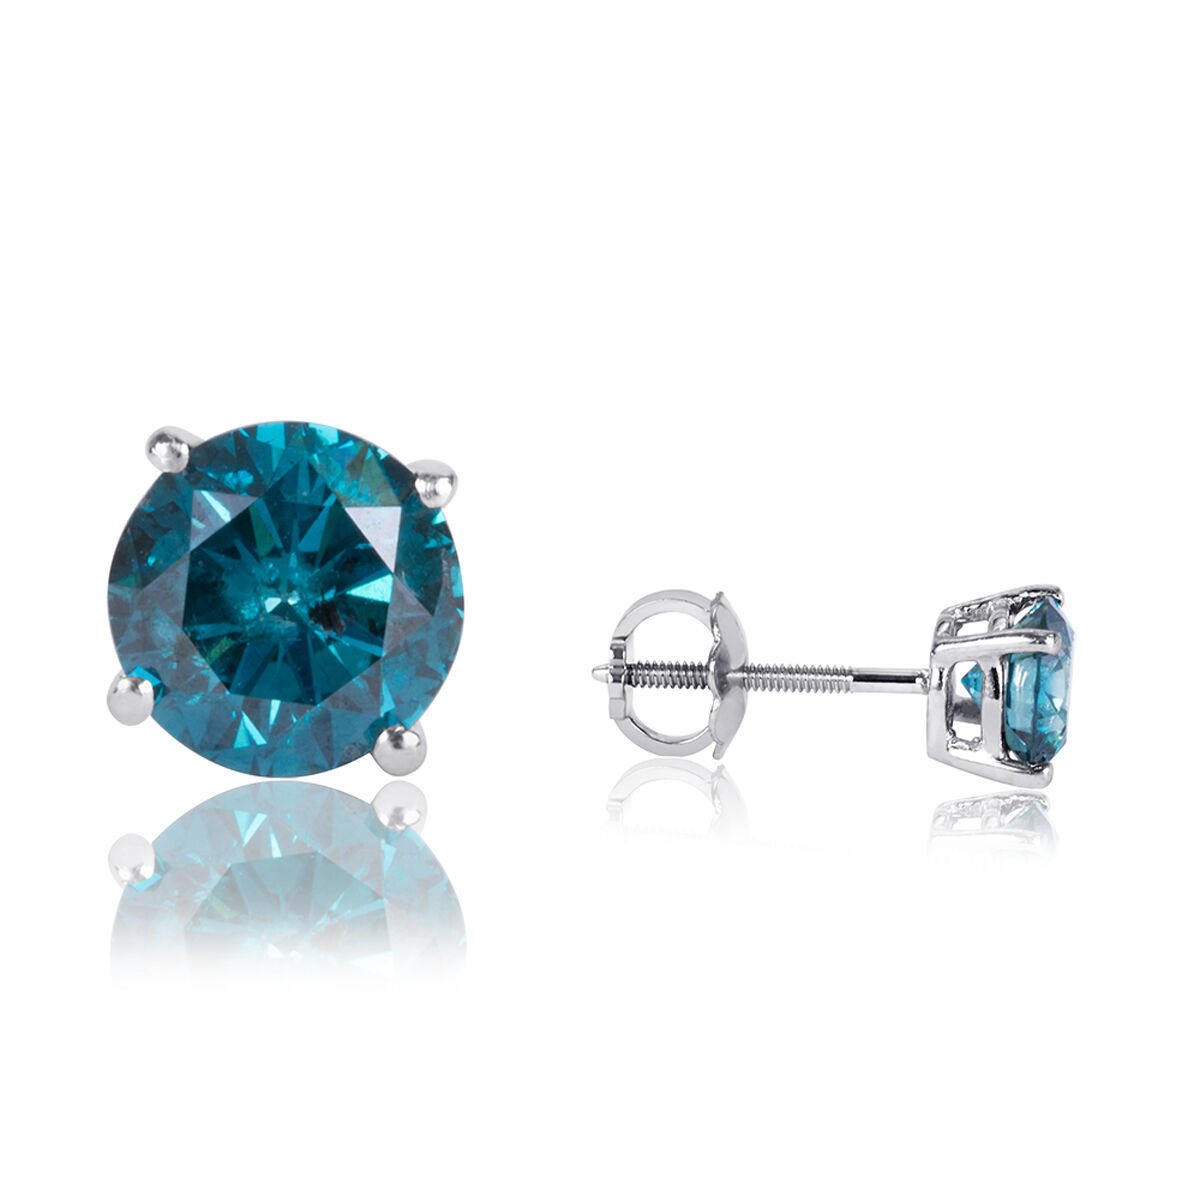 Limor - Blue i1-i2 round cut enhanced genuine diamond 4 prong solid gold stud earrings